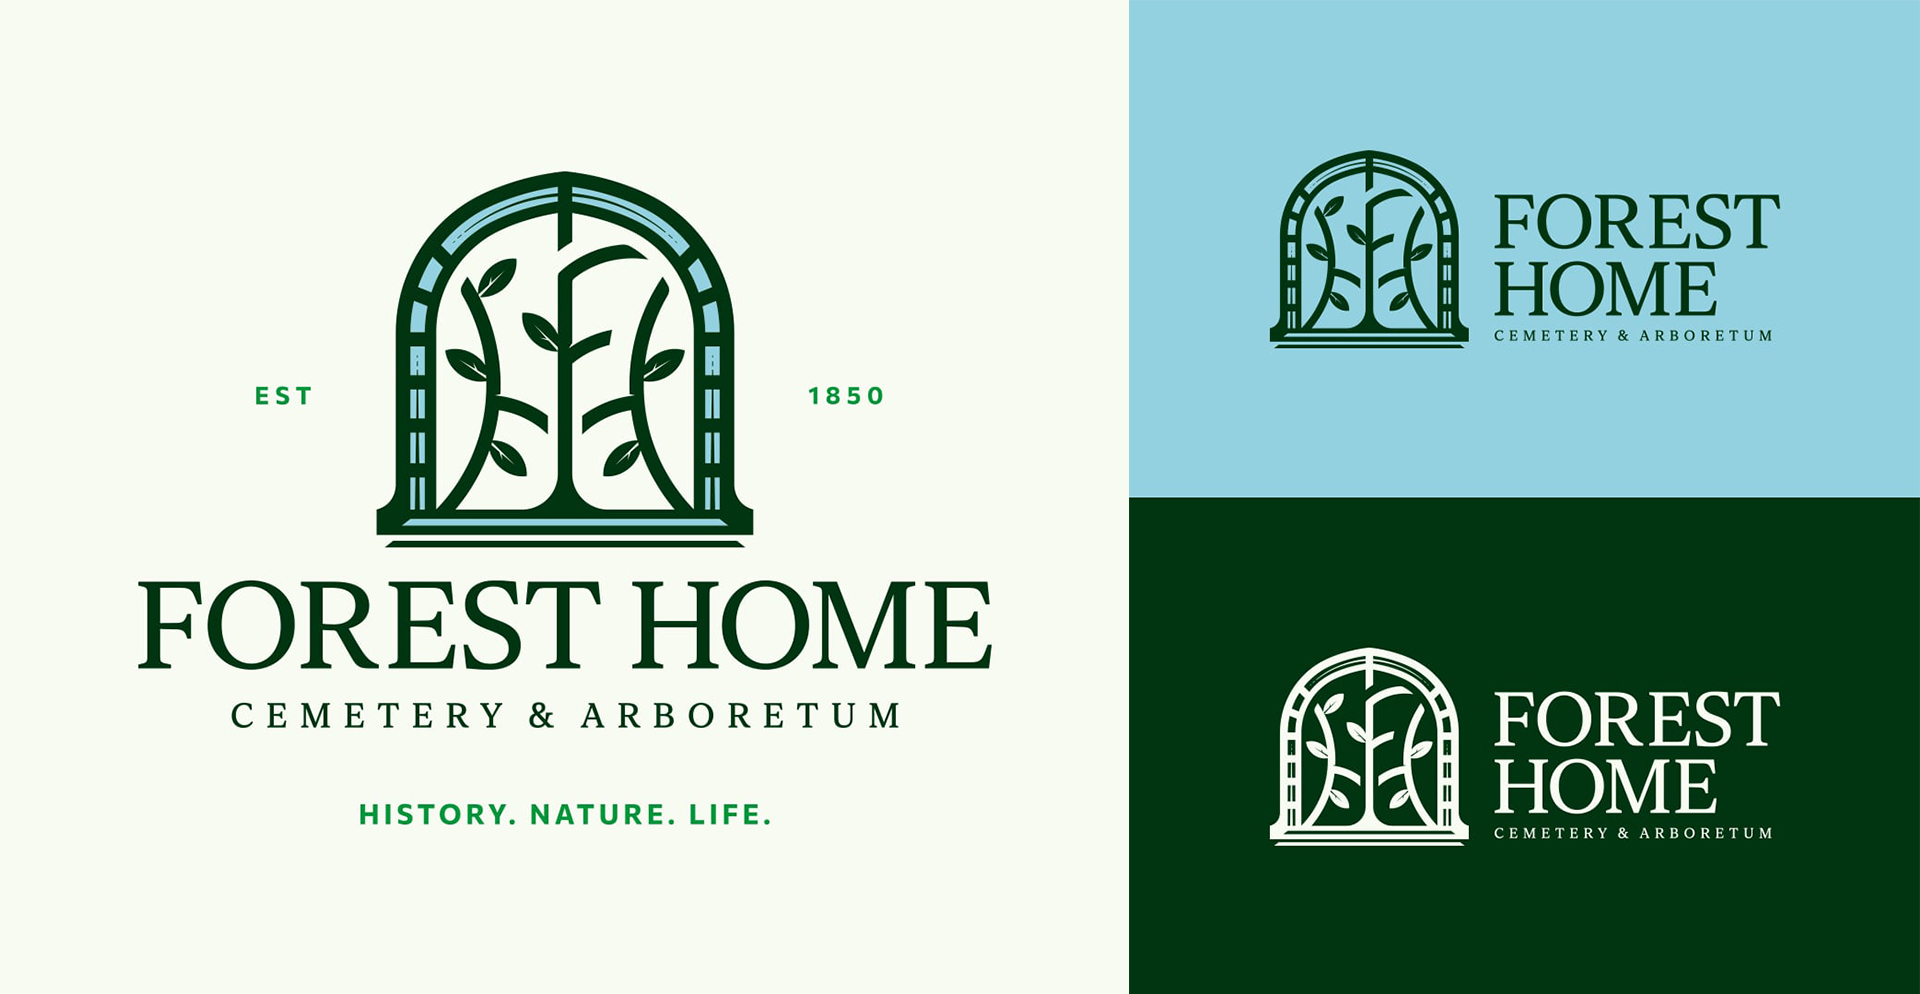 Forest Home Cemetery & Arboretum logo